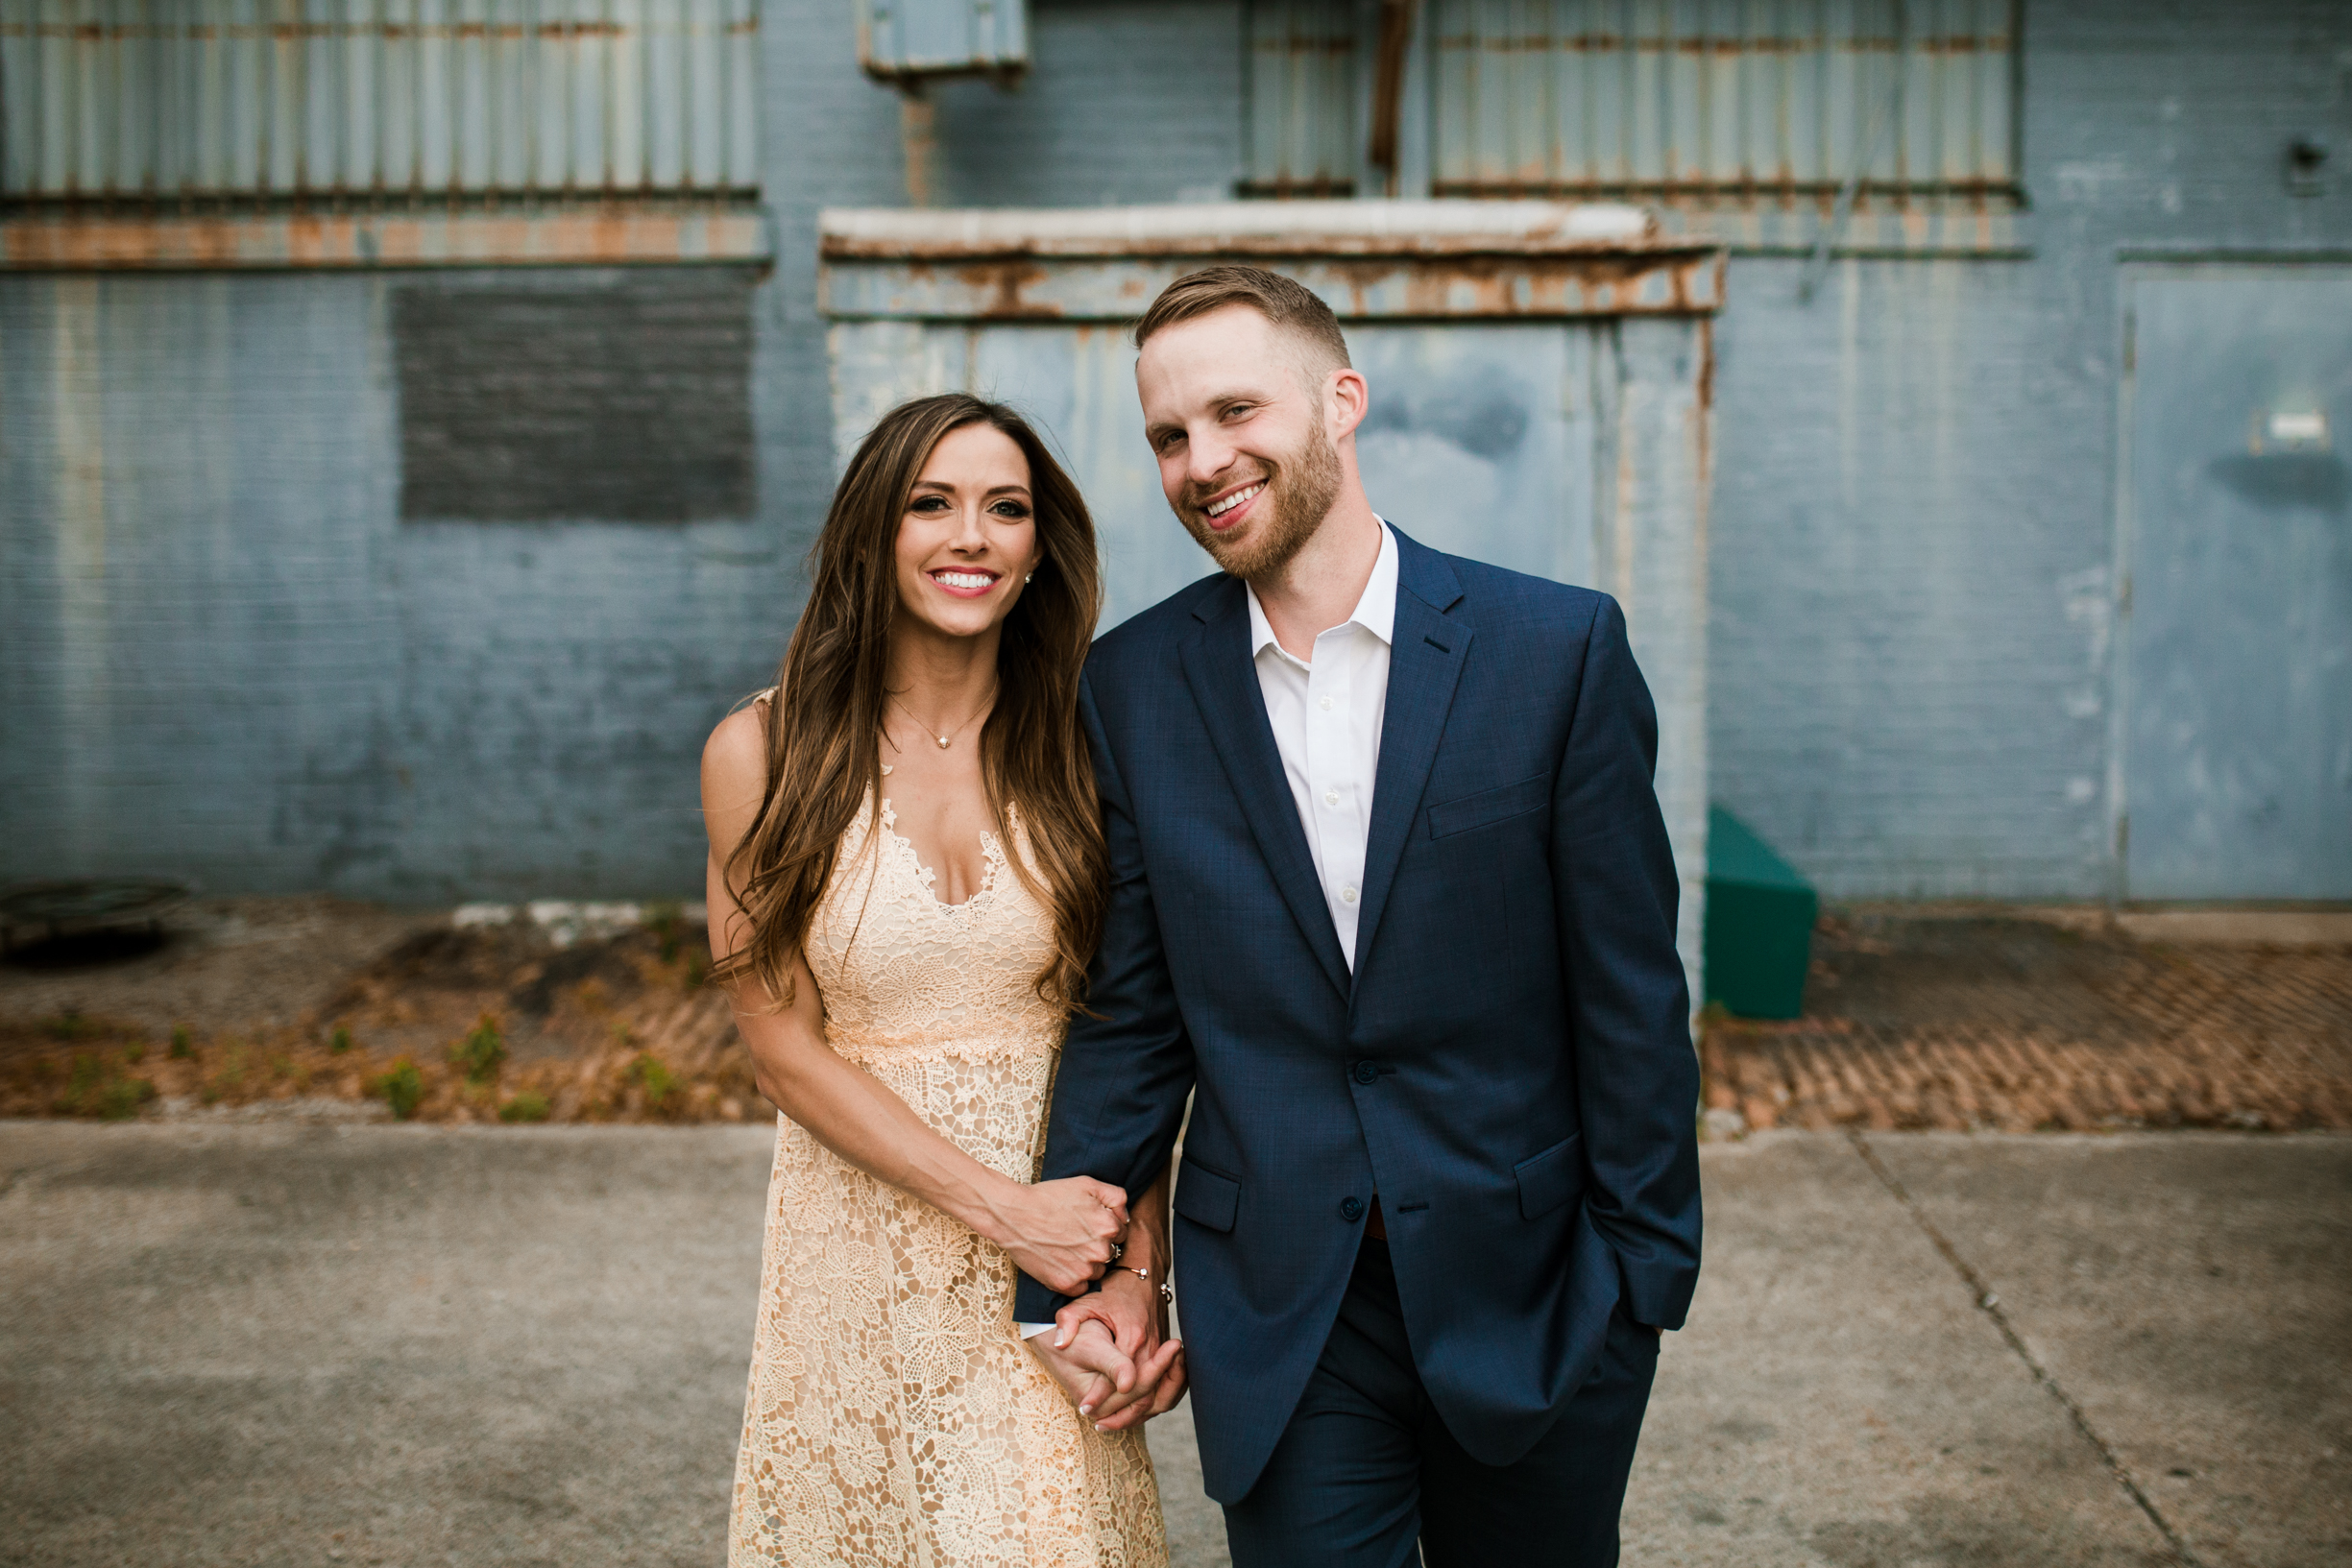 Victoria & Chad Engagement 2018 Crystal Ludwick Photo Louisville Kentucky Wedding Photographer WEBSITE (45 of 48).jpg